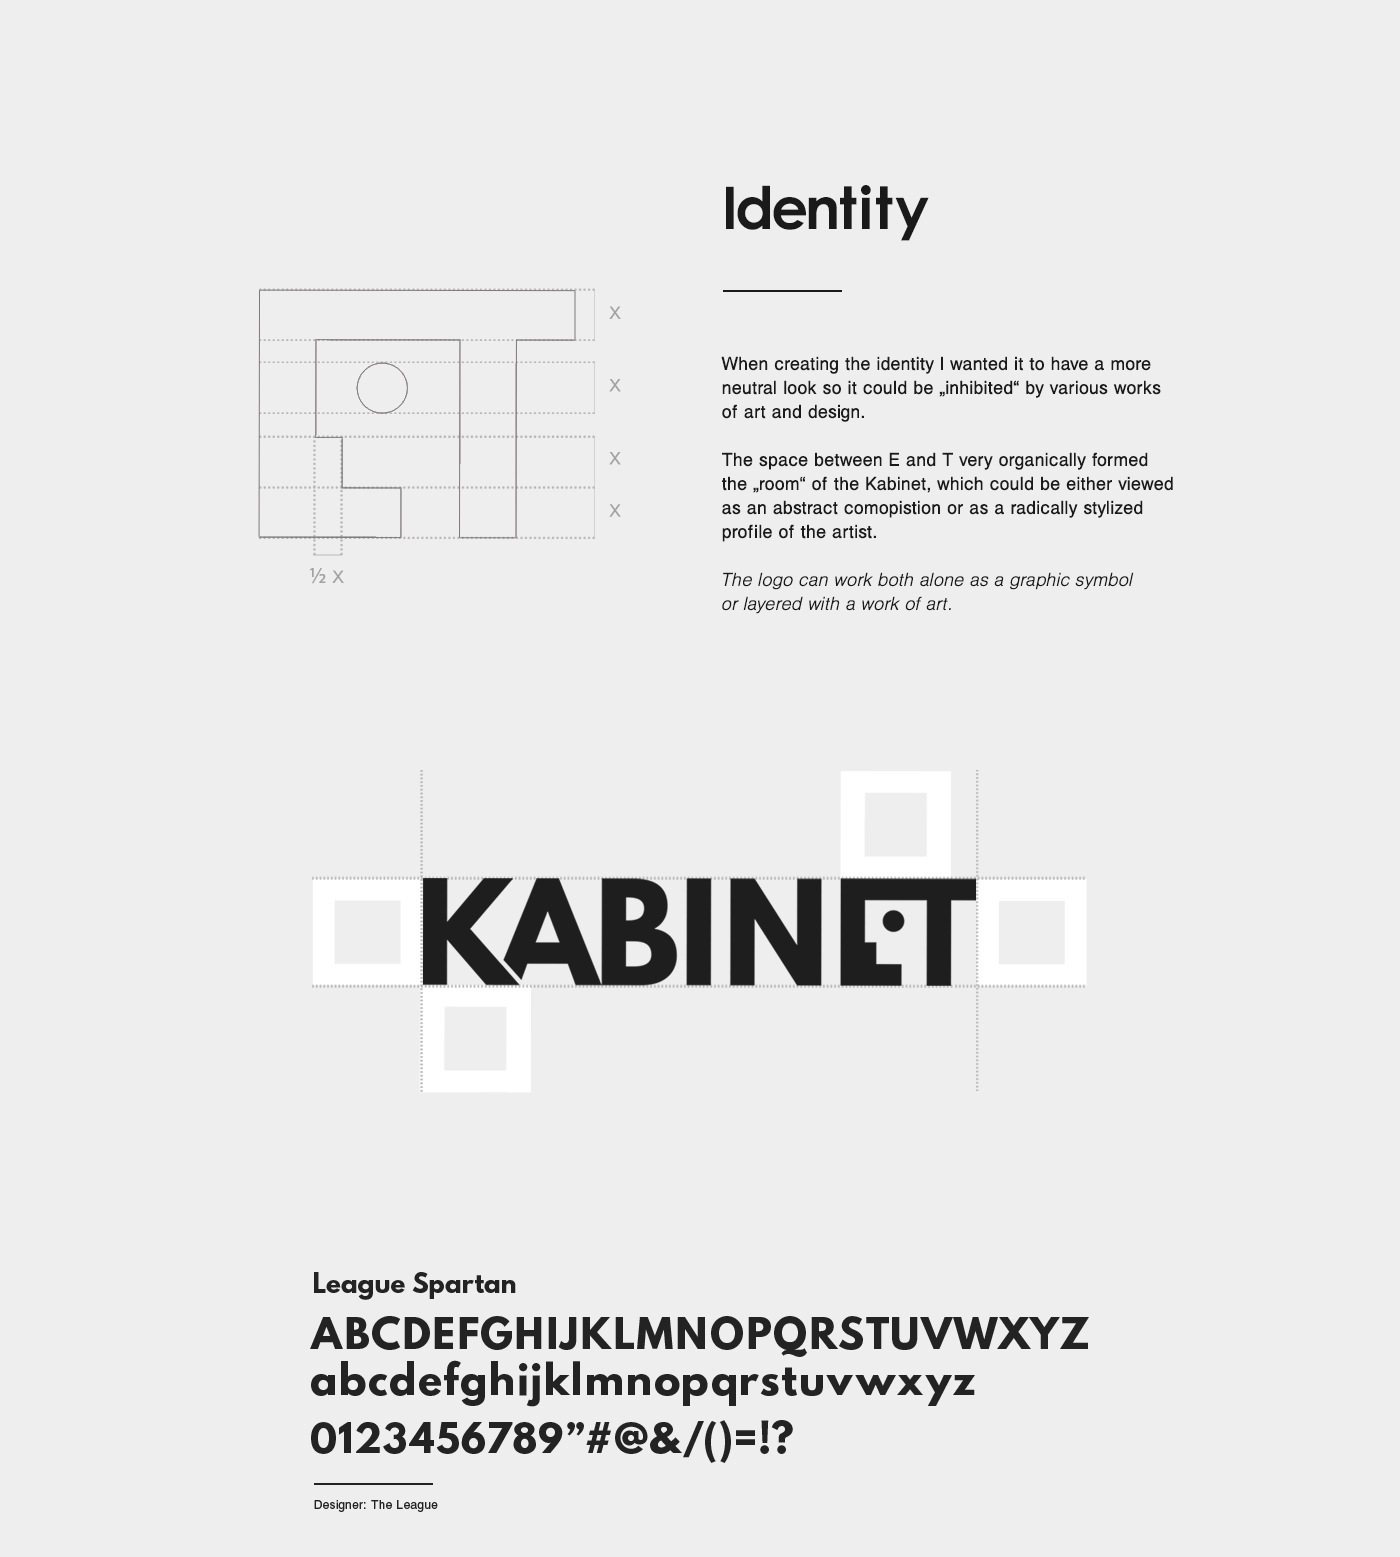 kabinet gallery museum art design contemporary Space  bauhaus culture tsvetomil ivanov identity